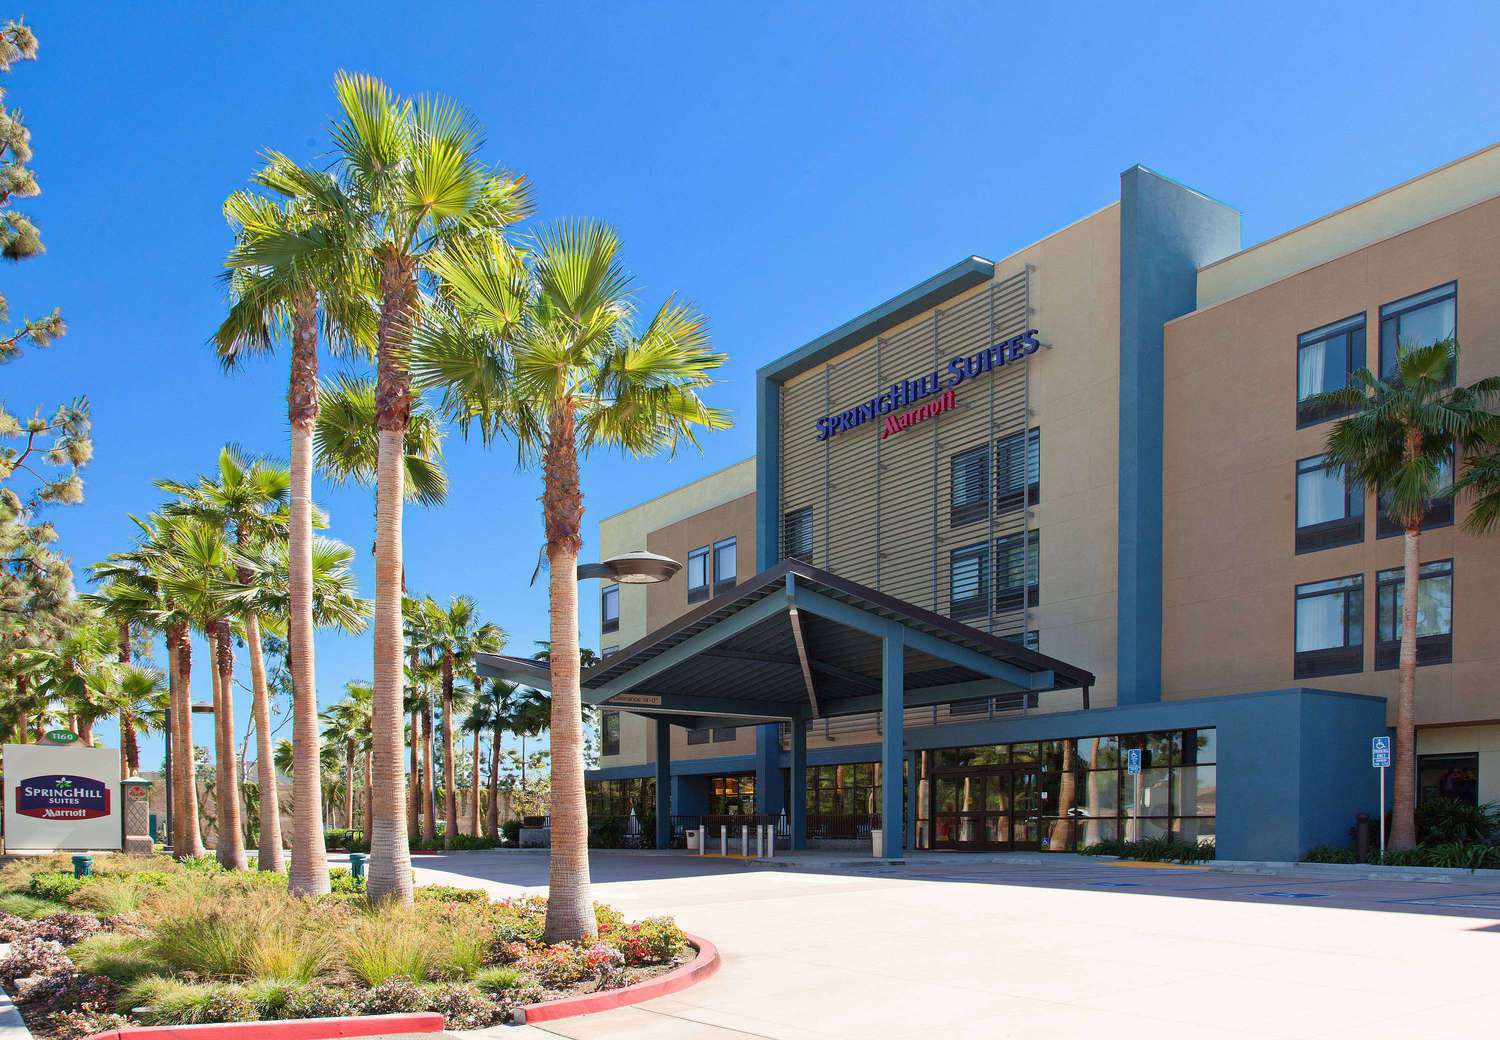 SpringHill Suites Anaheim Maingate  Anaheim  Jobs Hospitality Online